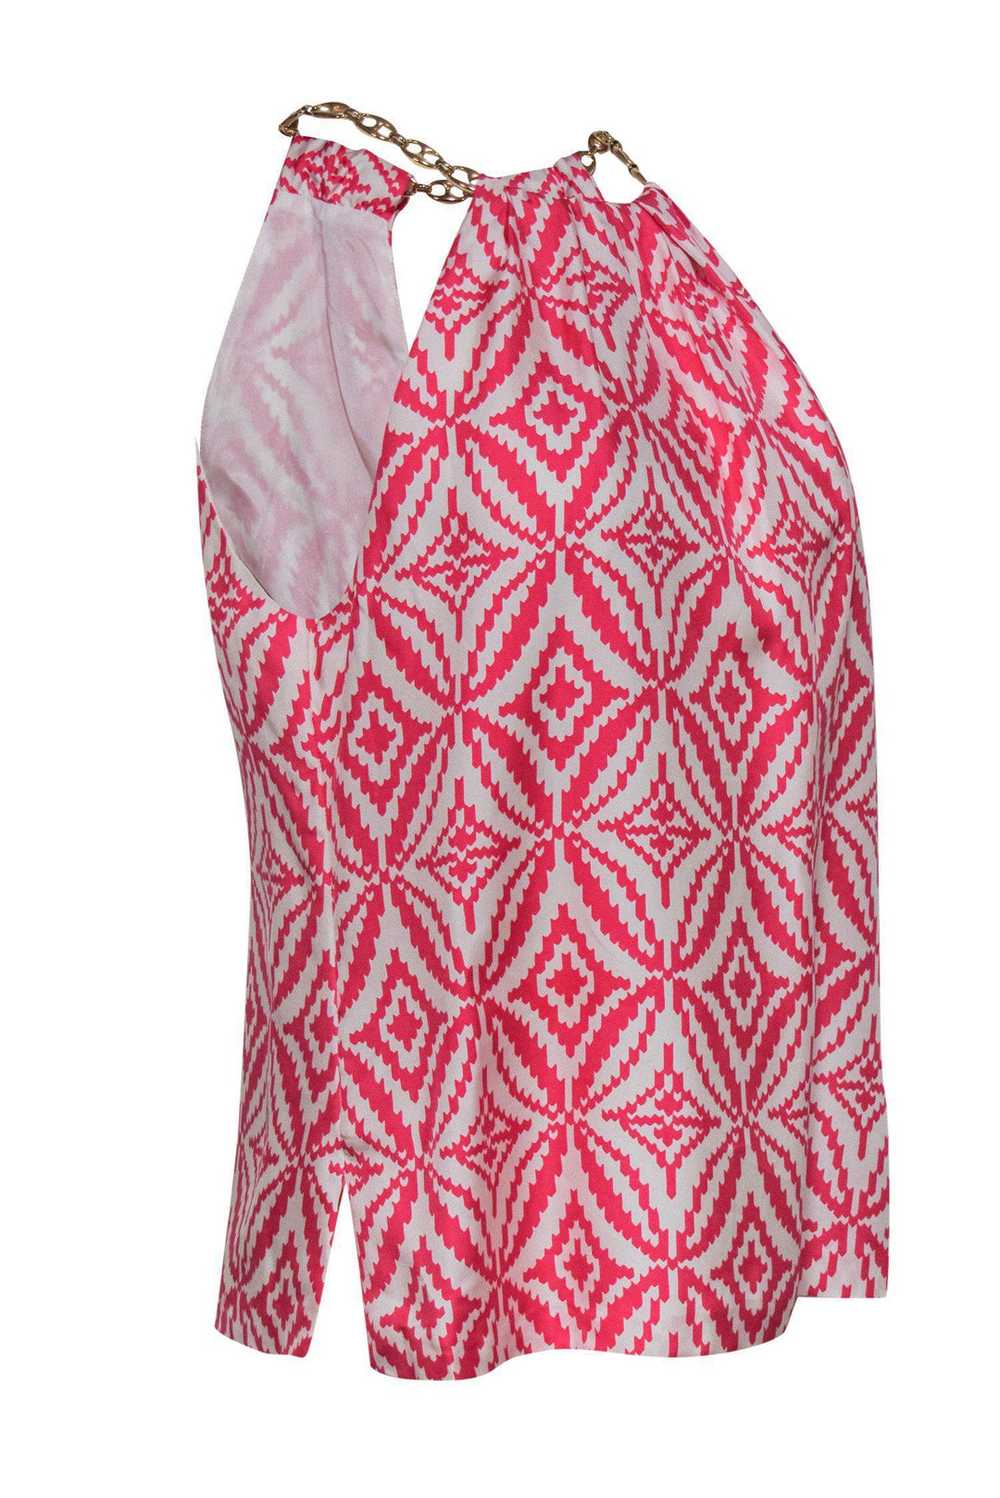 Milly - Pink & White Printed Silk Halter Top w/ C… - image 2